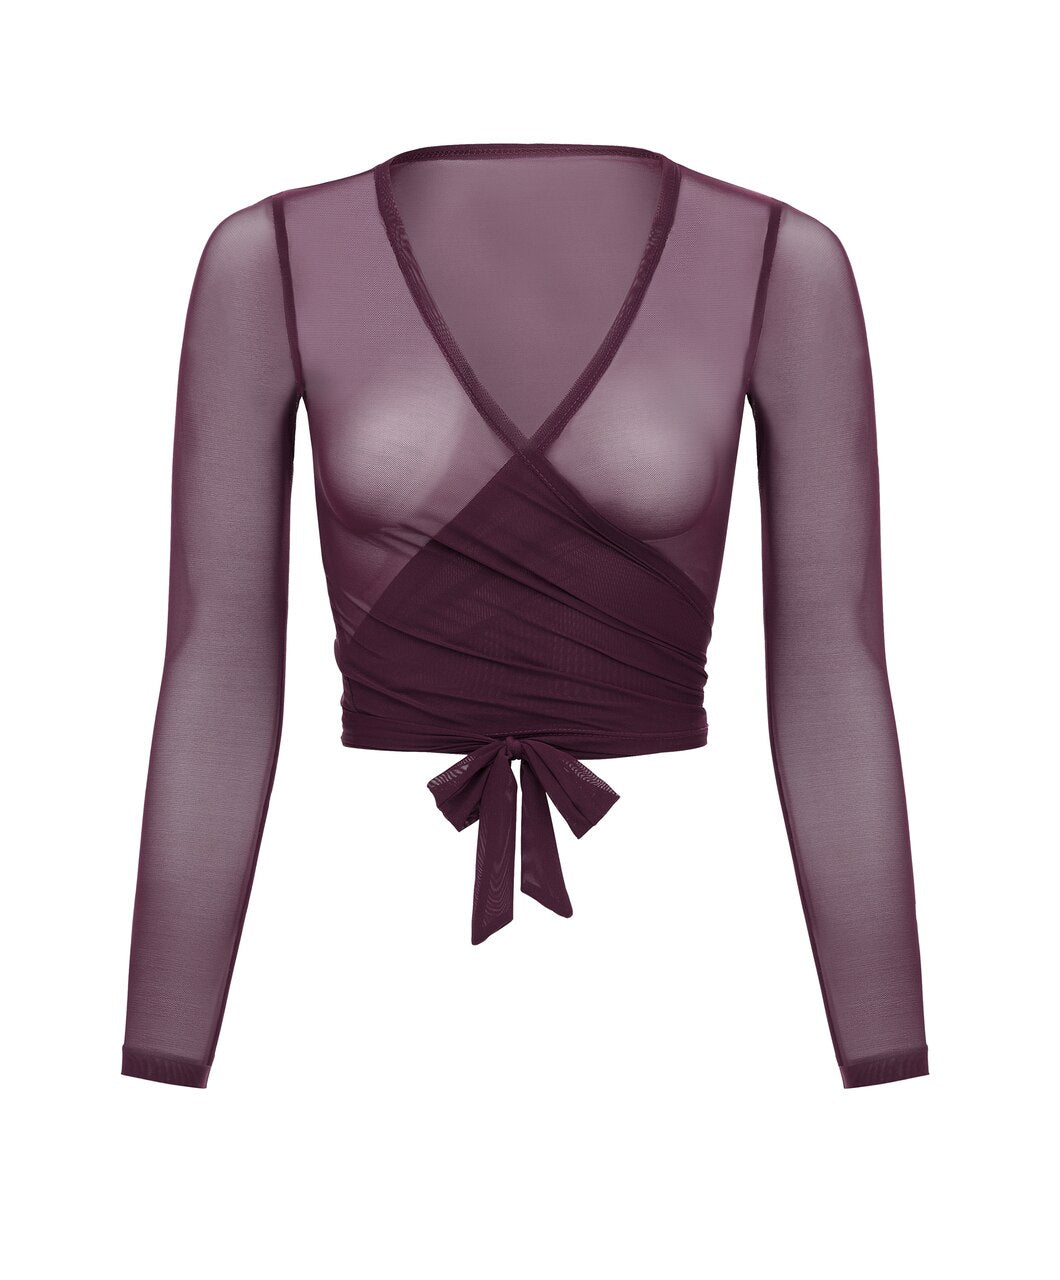 Ballet Jacket Yoga Wrap Top Tie in Front Mini Jacket Women's Blouse  Cover-up Top Shrug in Jasper Green 